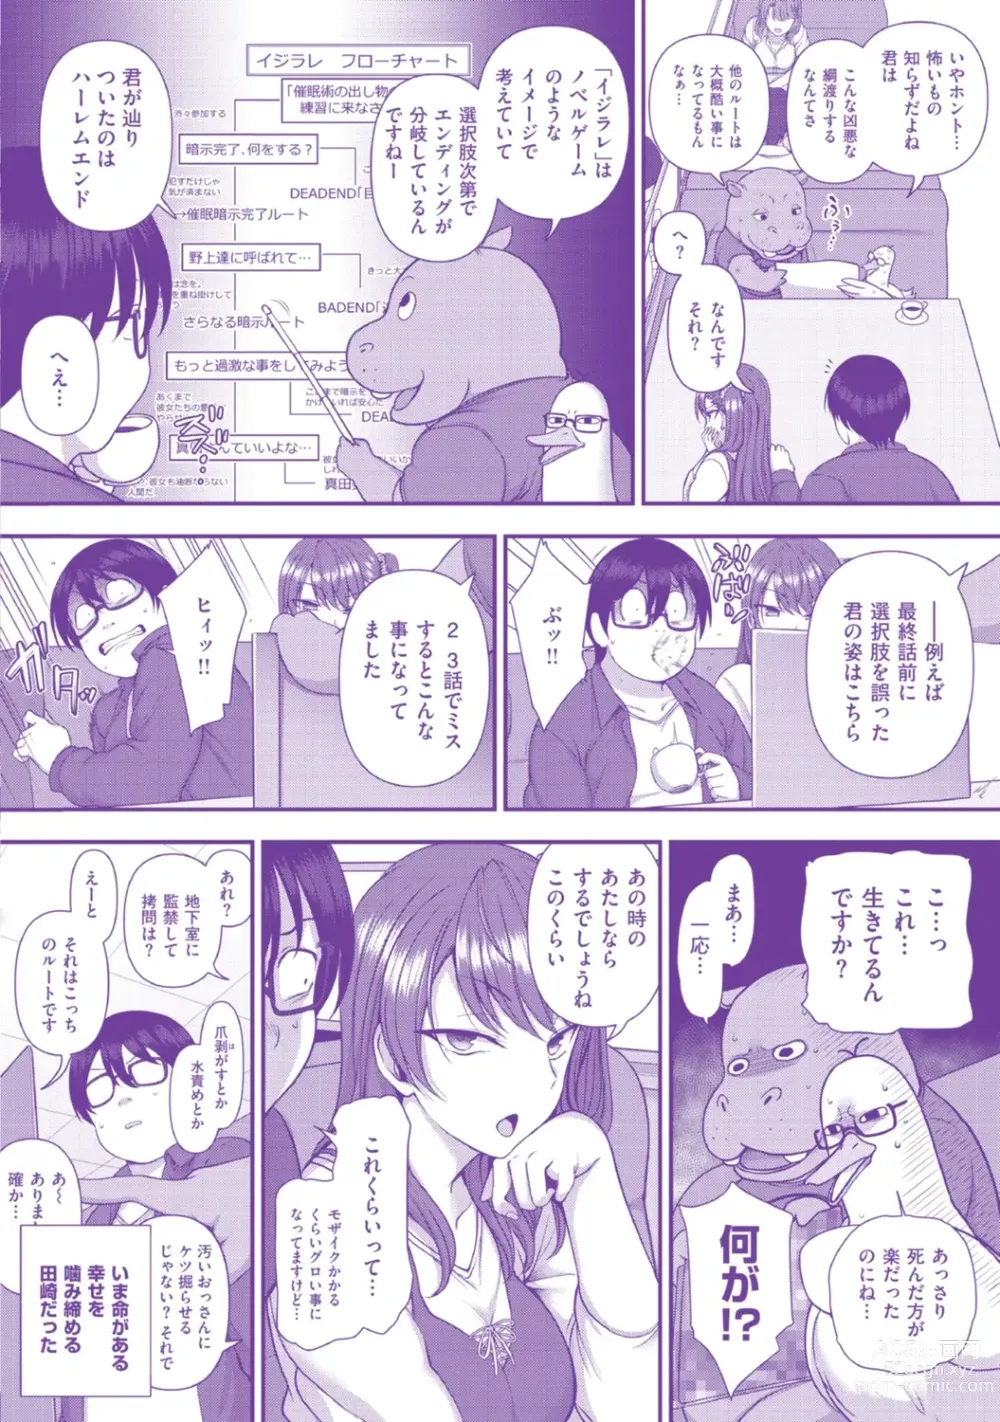 Page 247 of manga Ijirare